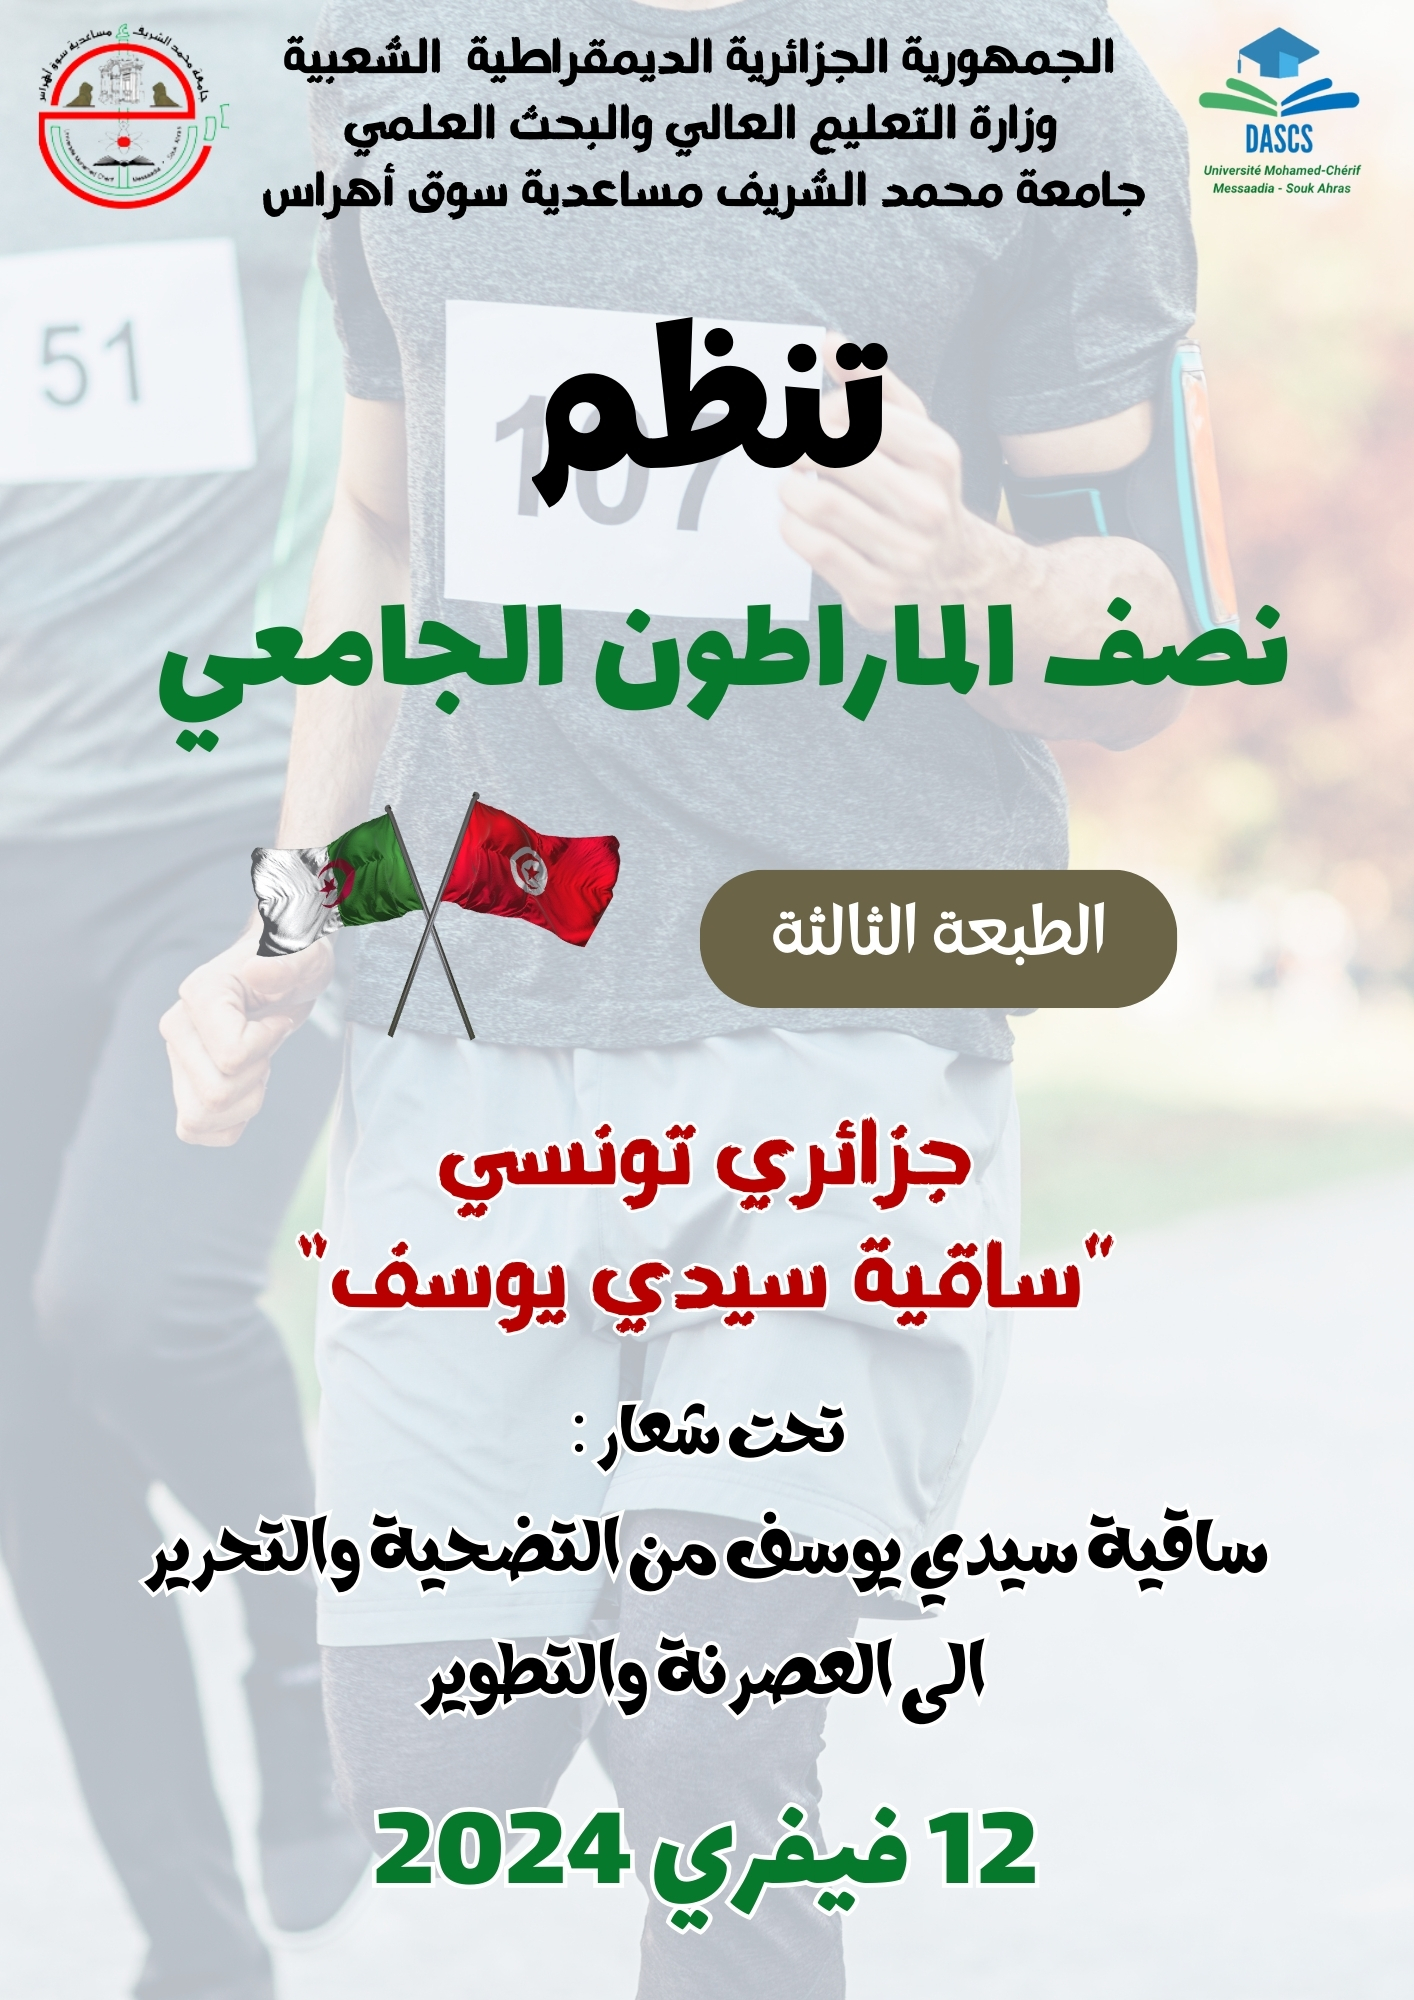 You are currently viewing الطبعة الثالثة من نصف المارطون الجامعي  » جزائري تونسي